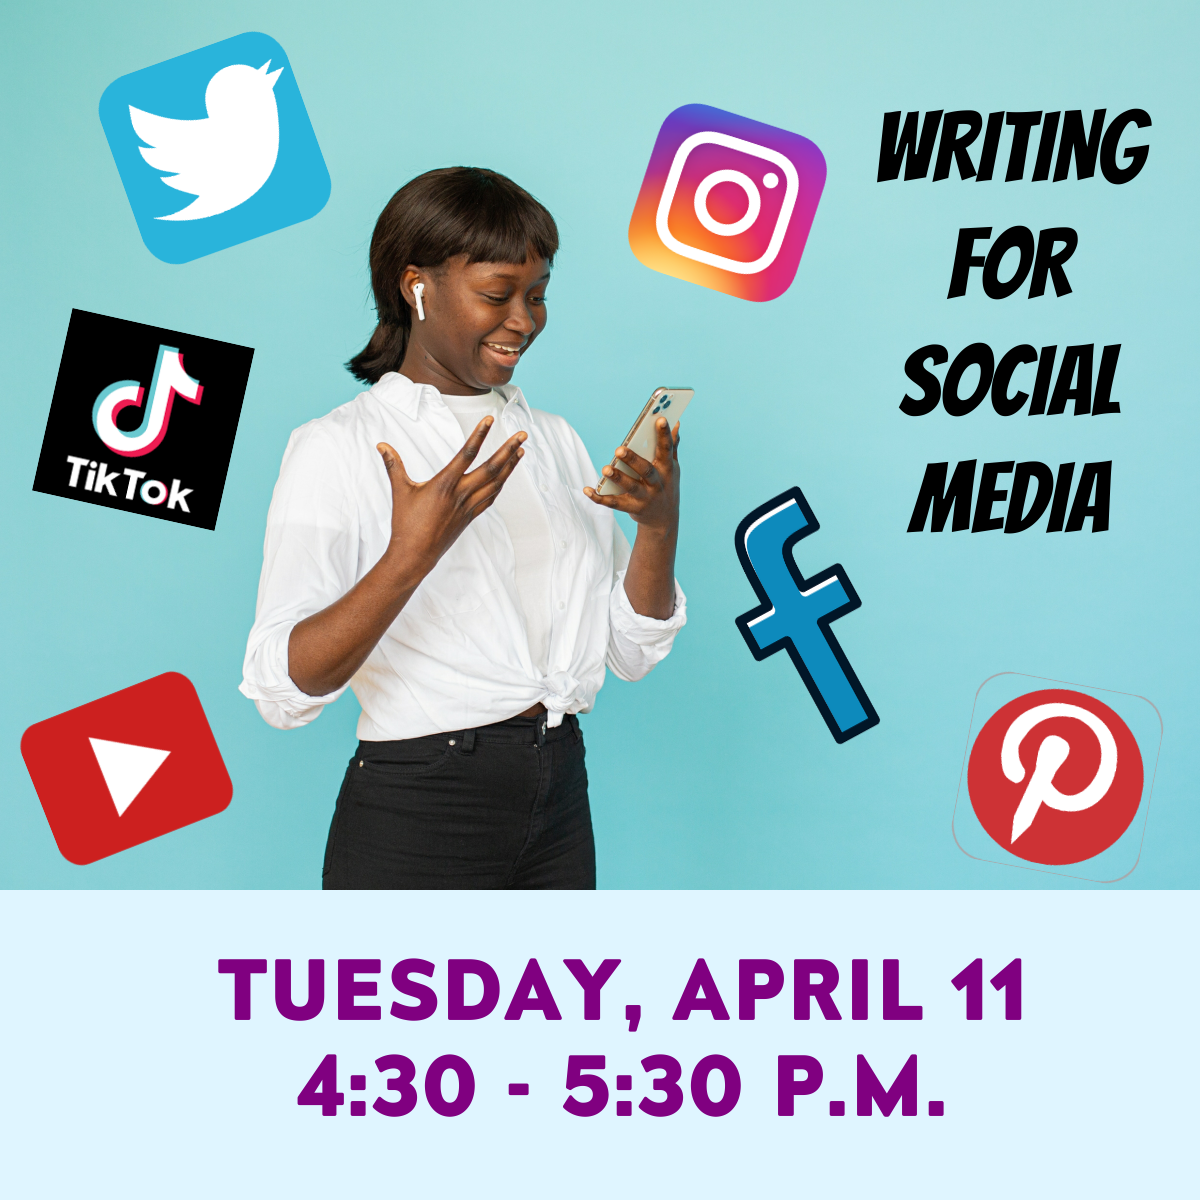 Writing for Social Media "Wednesday April 11, 4:30-5:30 p.m."